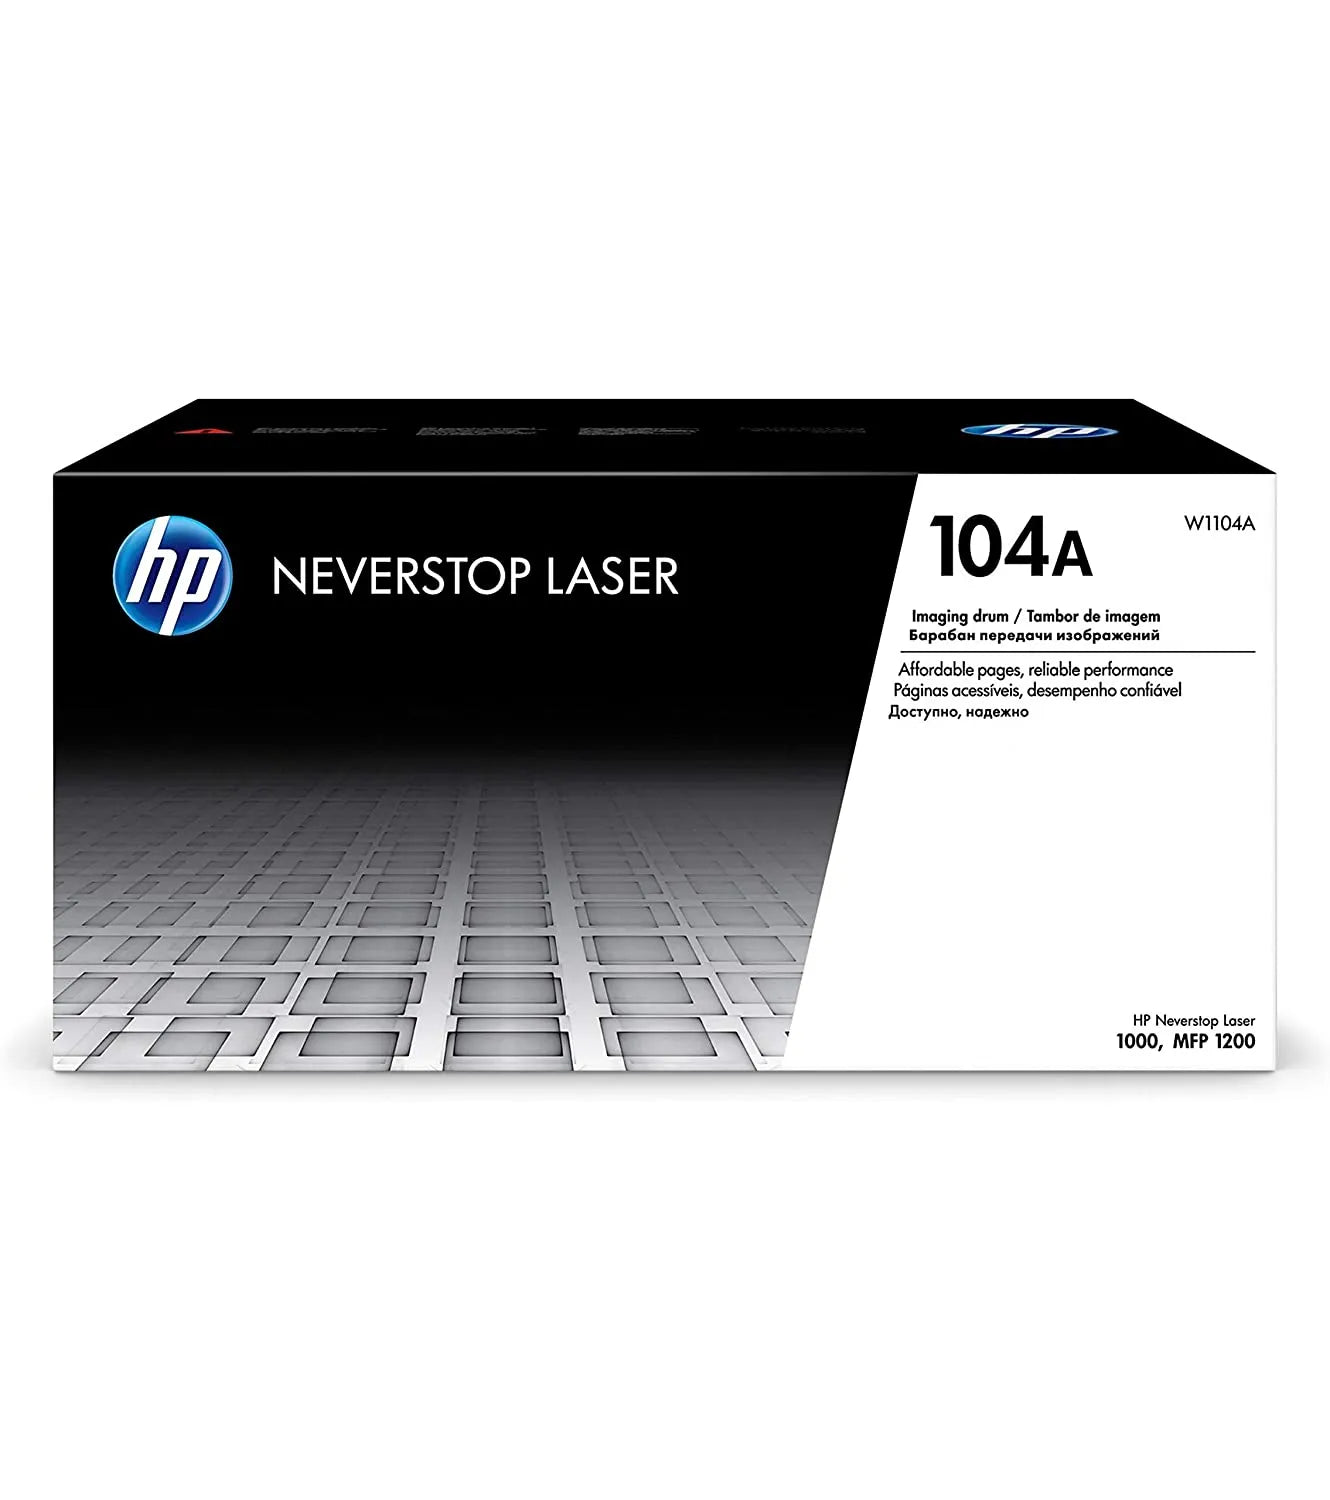 HP 104A Original Laser Imaging Drum Toner Cartridge &#8211; (W1104A)